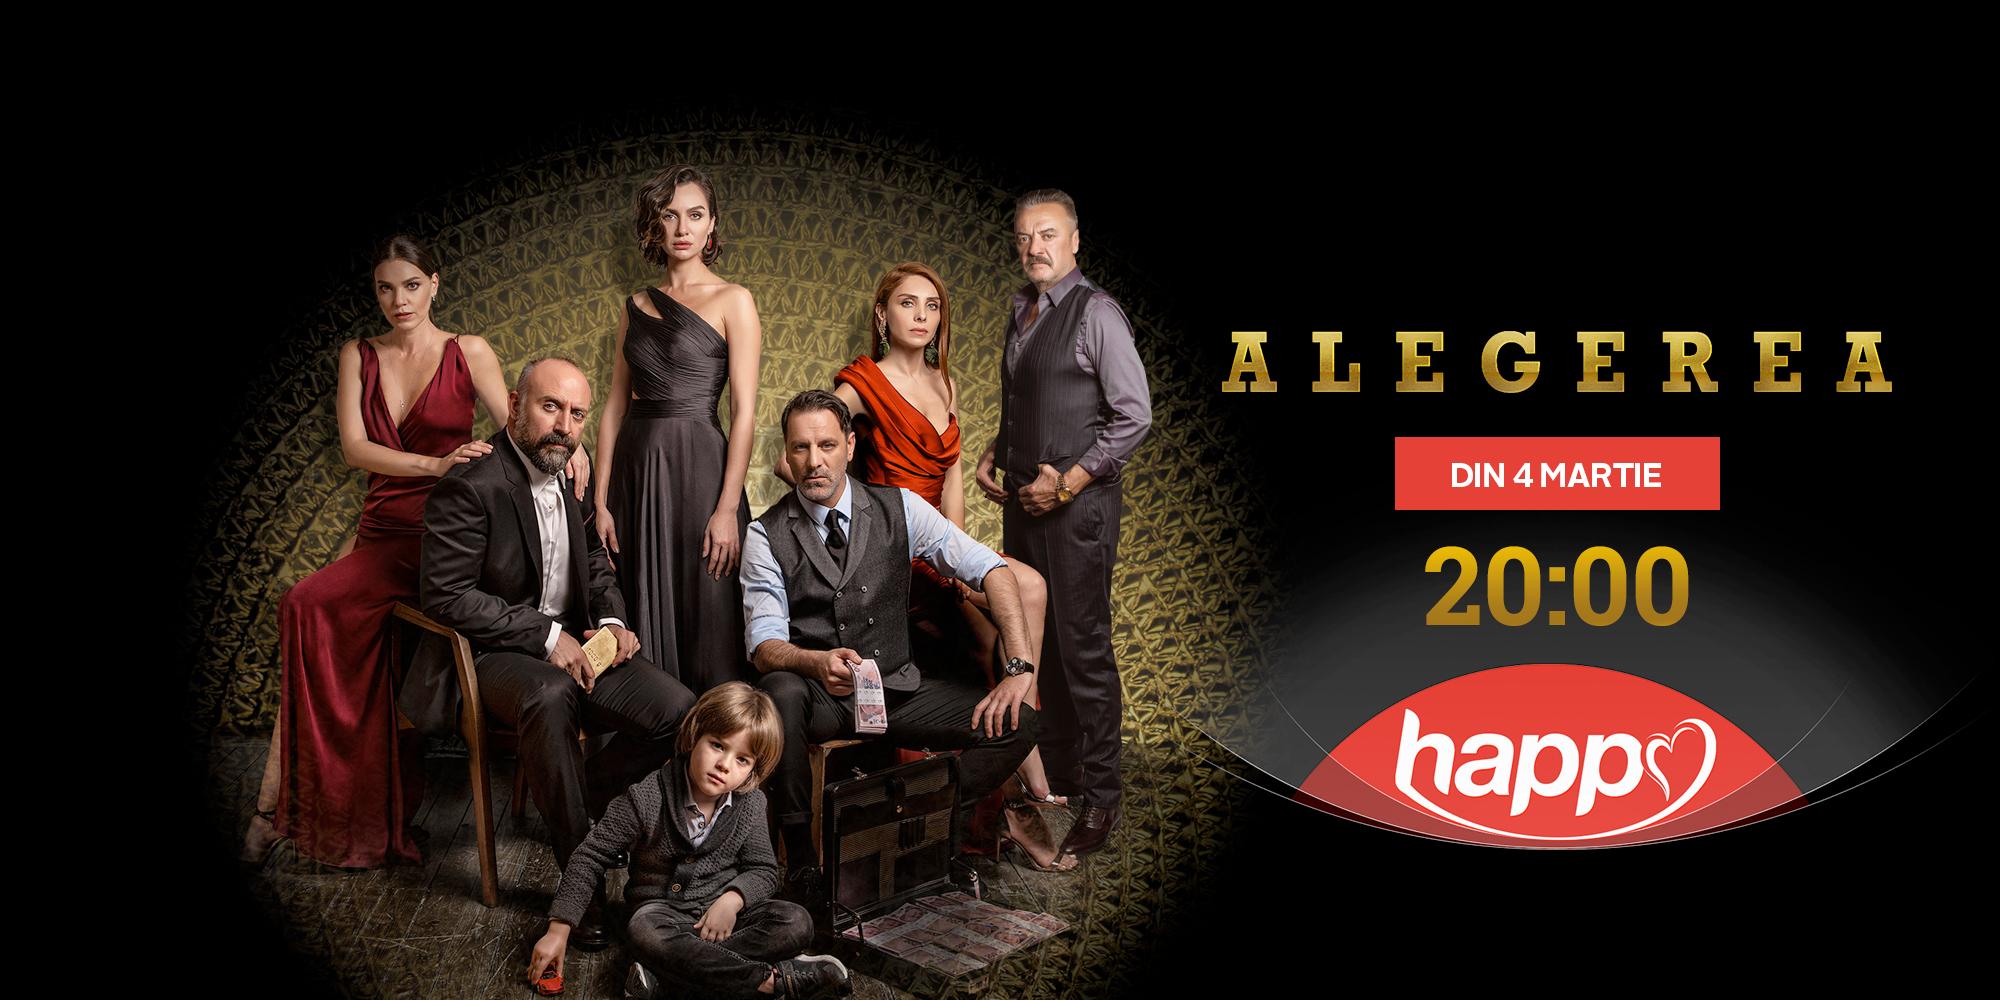 Feud Investigation sunlight Din 4 martie, „Alegerea”, un nou serial turcesc vine la Happy Channel